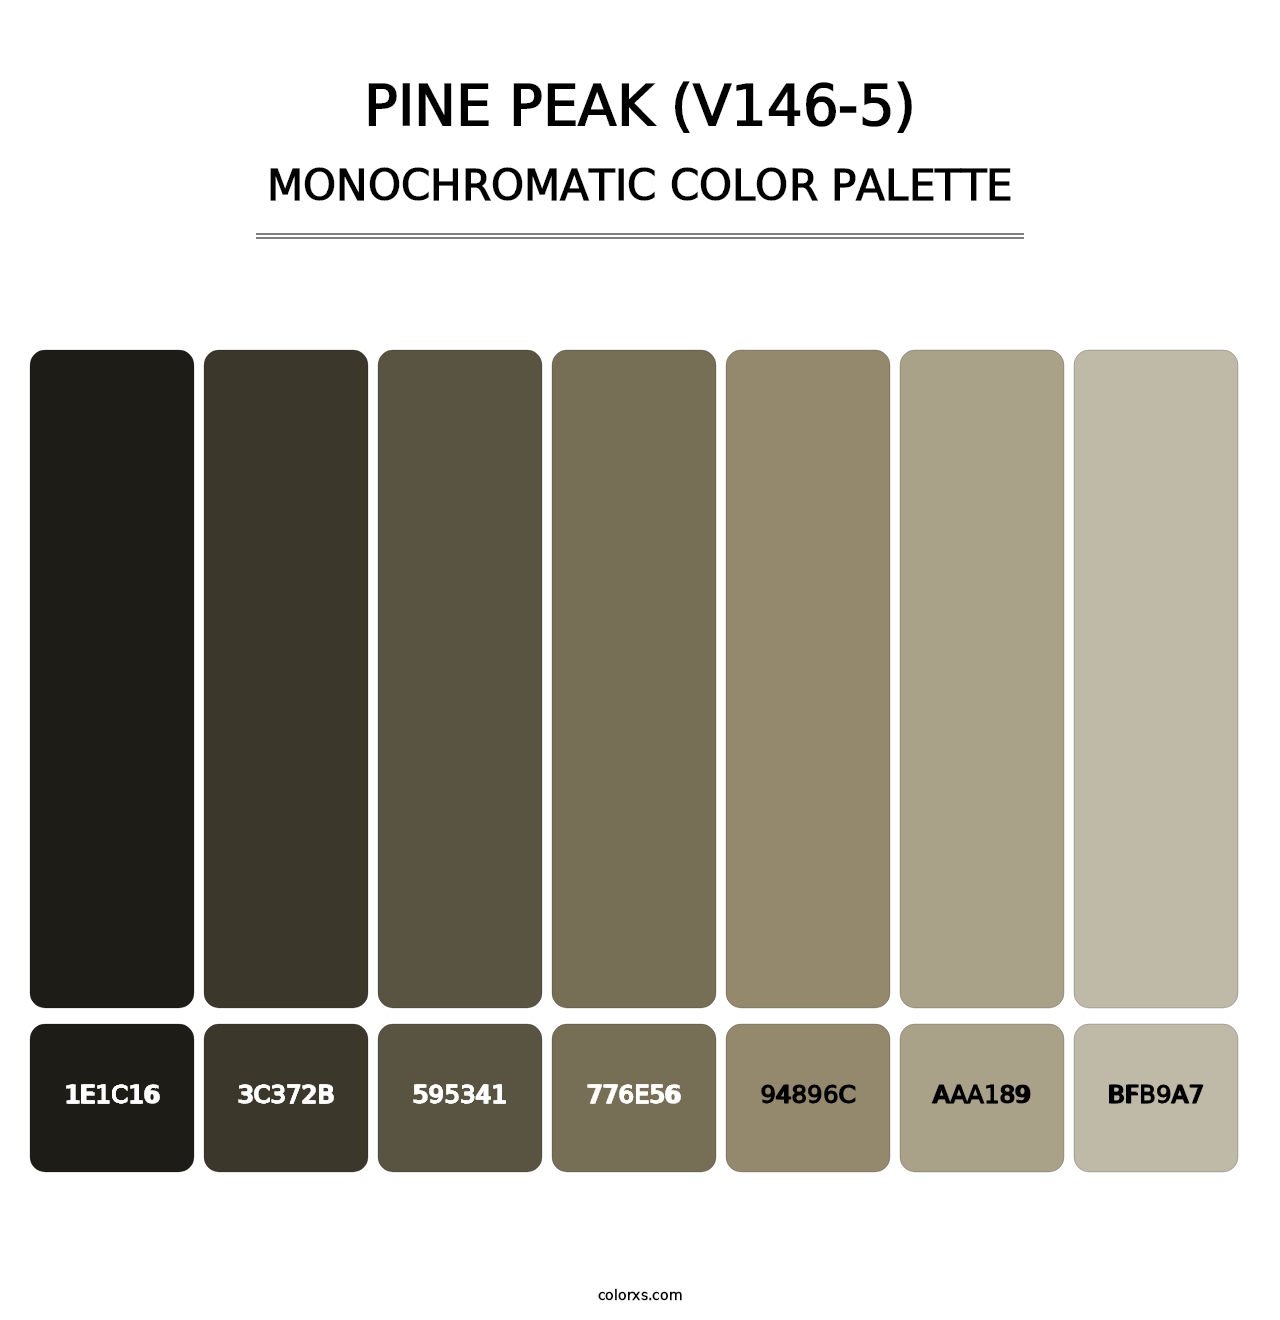 Pine Peak (V146-5) - Monochromatic Color Palette